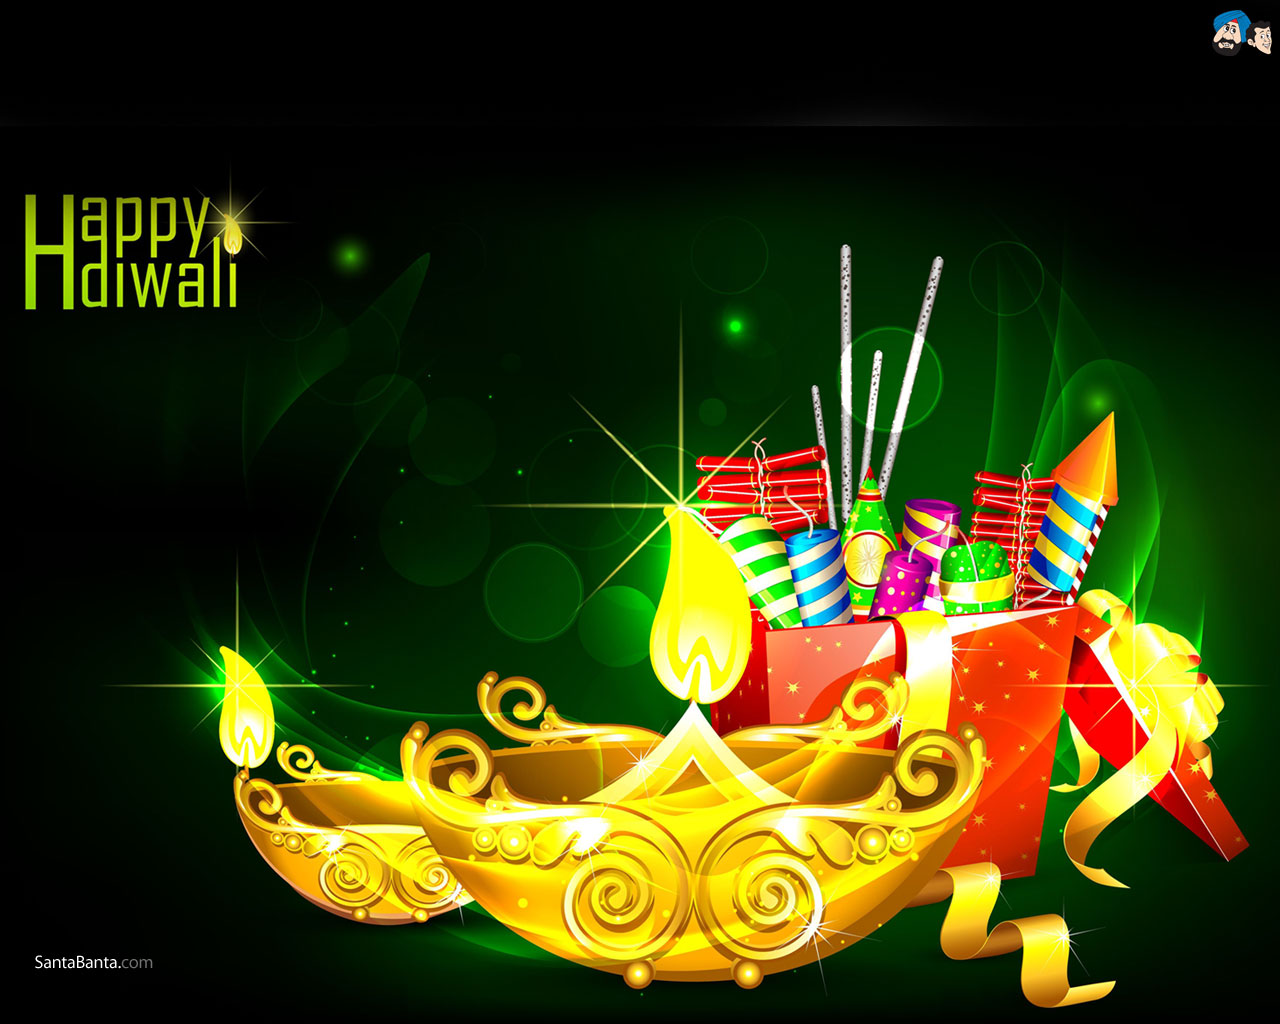 Happy Diwali In Malayalam - HD Wallpaper 